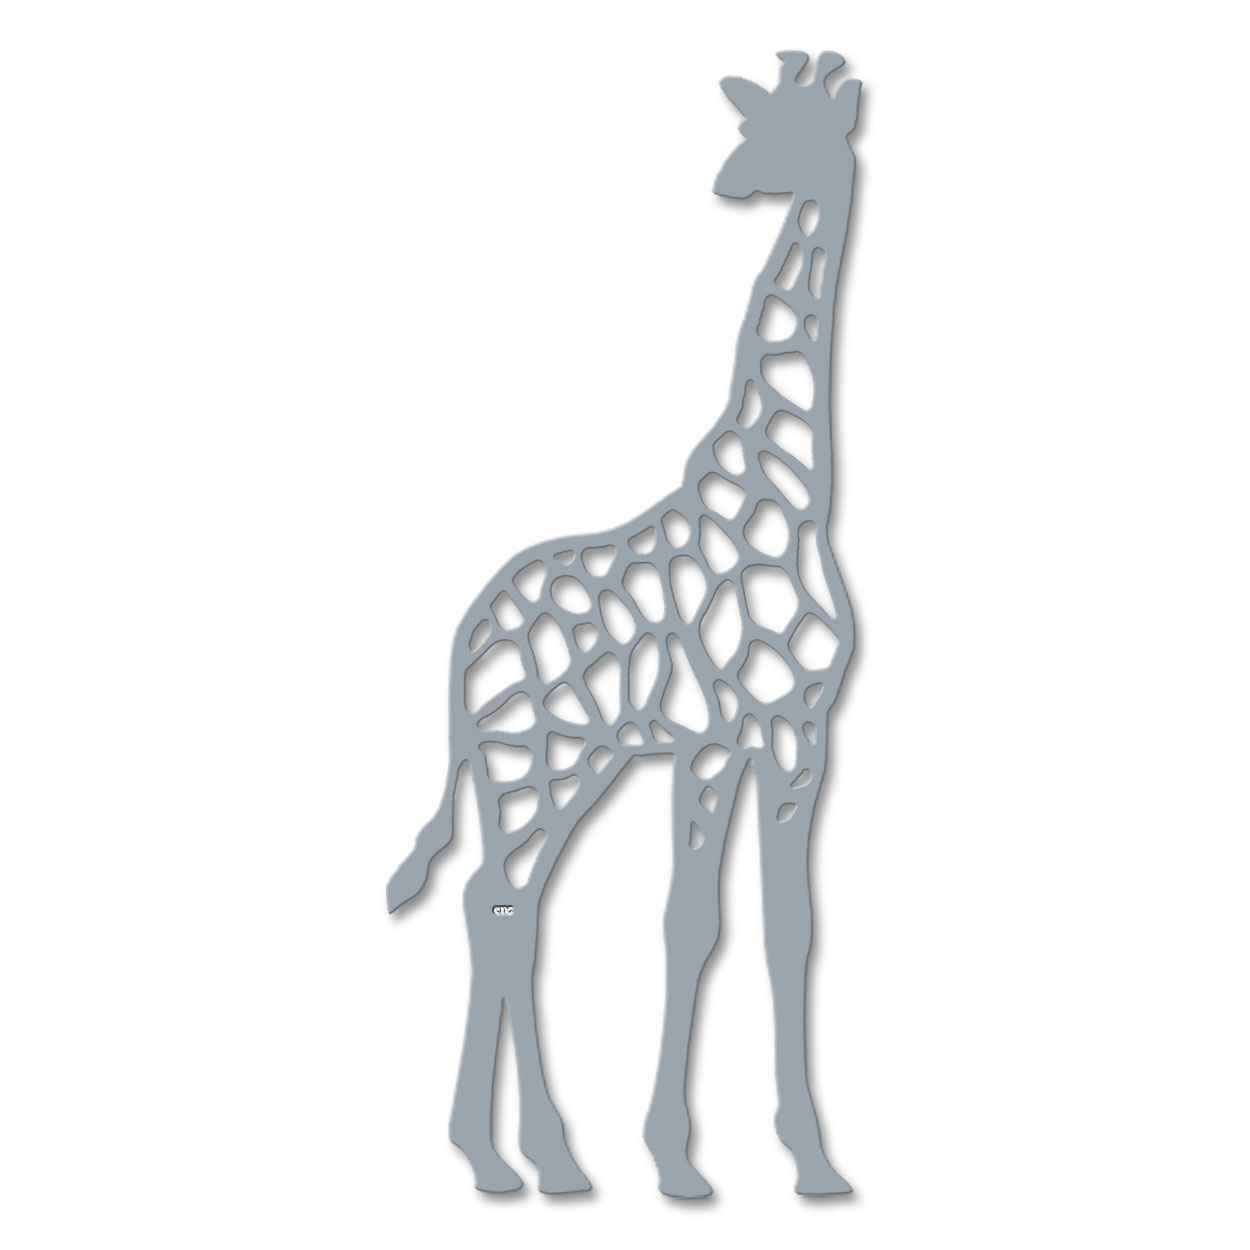 625425 - 18 or 24in Metal Wall Art - Giraffe - Choose Color